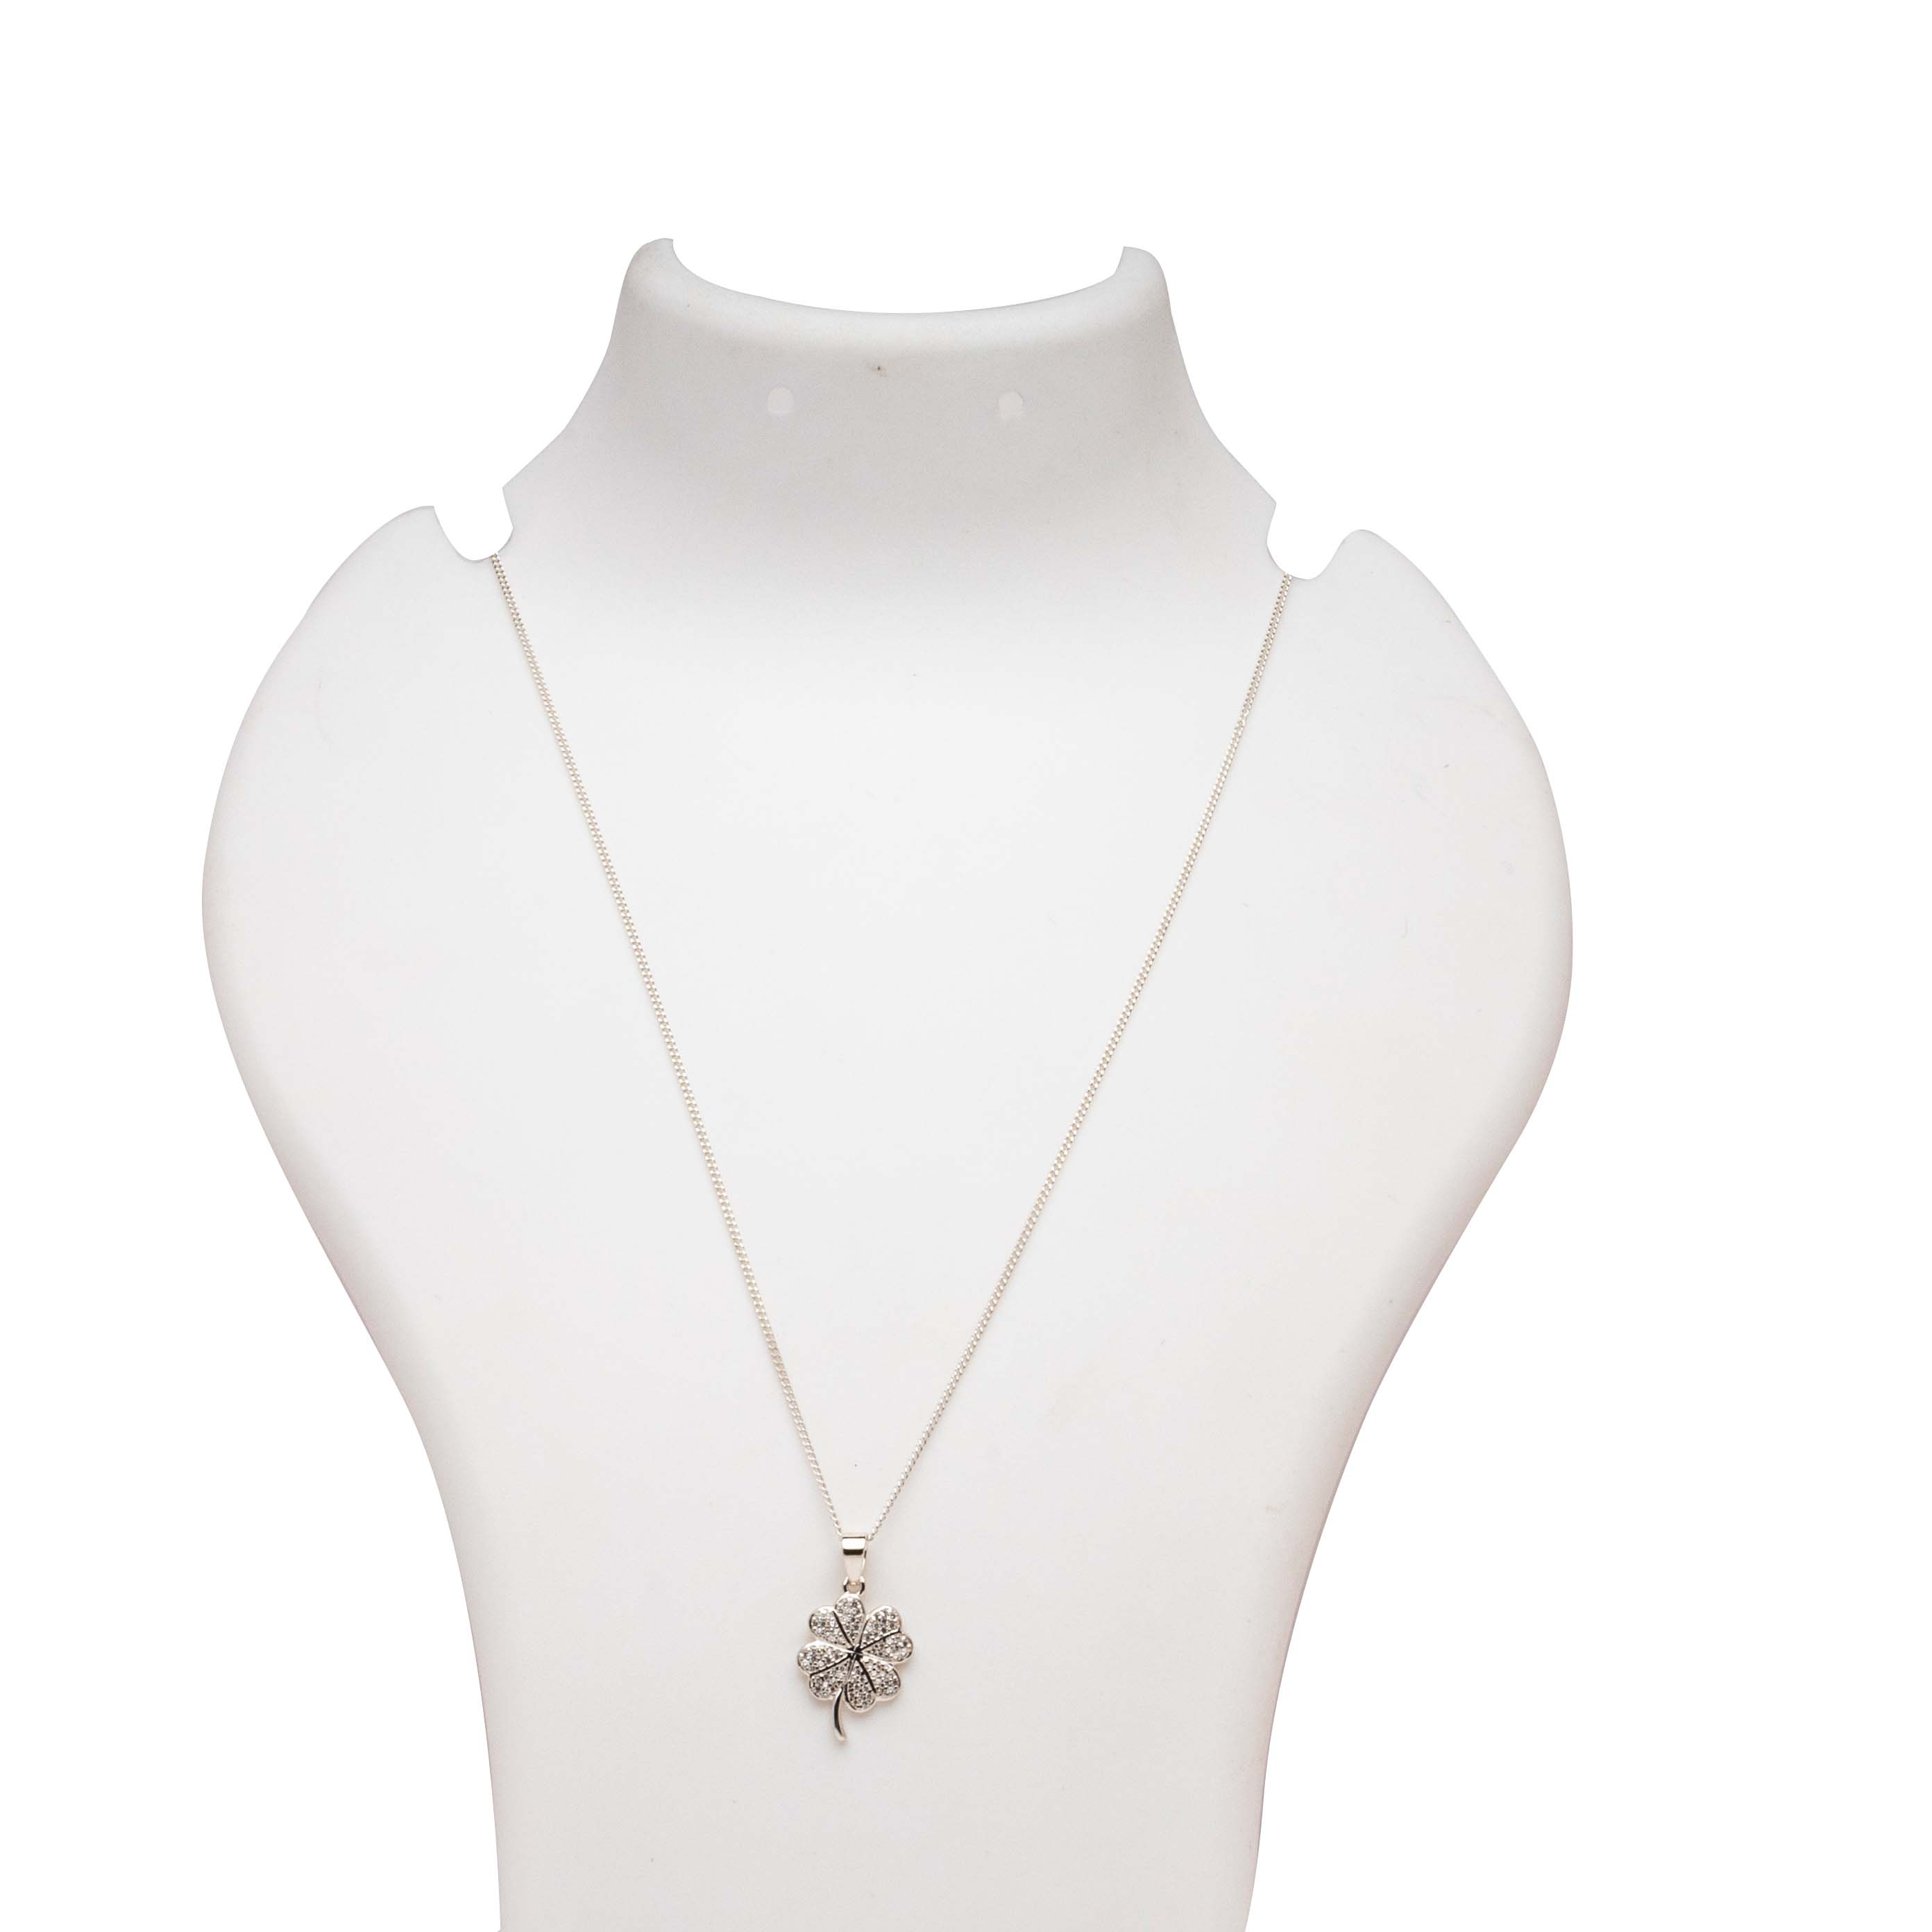  TBK 4 Leaf Clover Necklace for Women 18k Gold Fashion Accessories  Hypoallergenic 1057n  Lazadavn